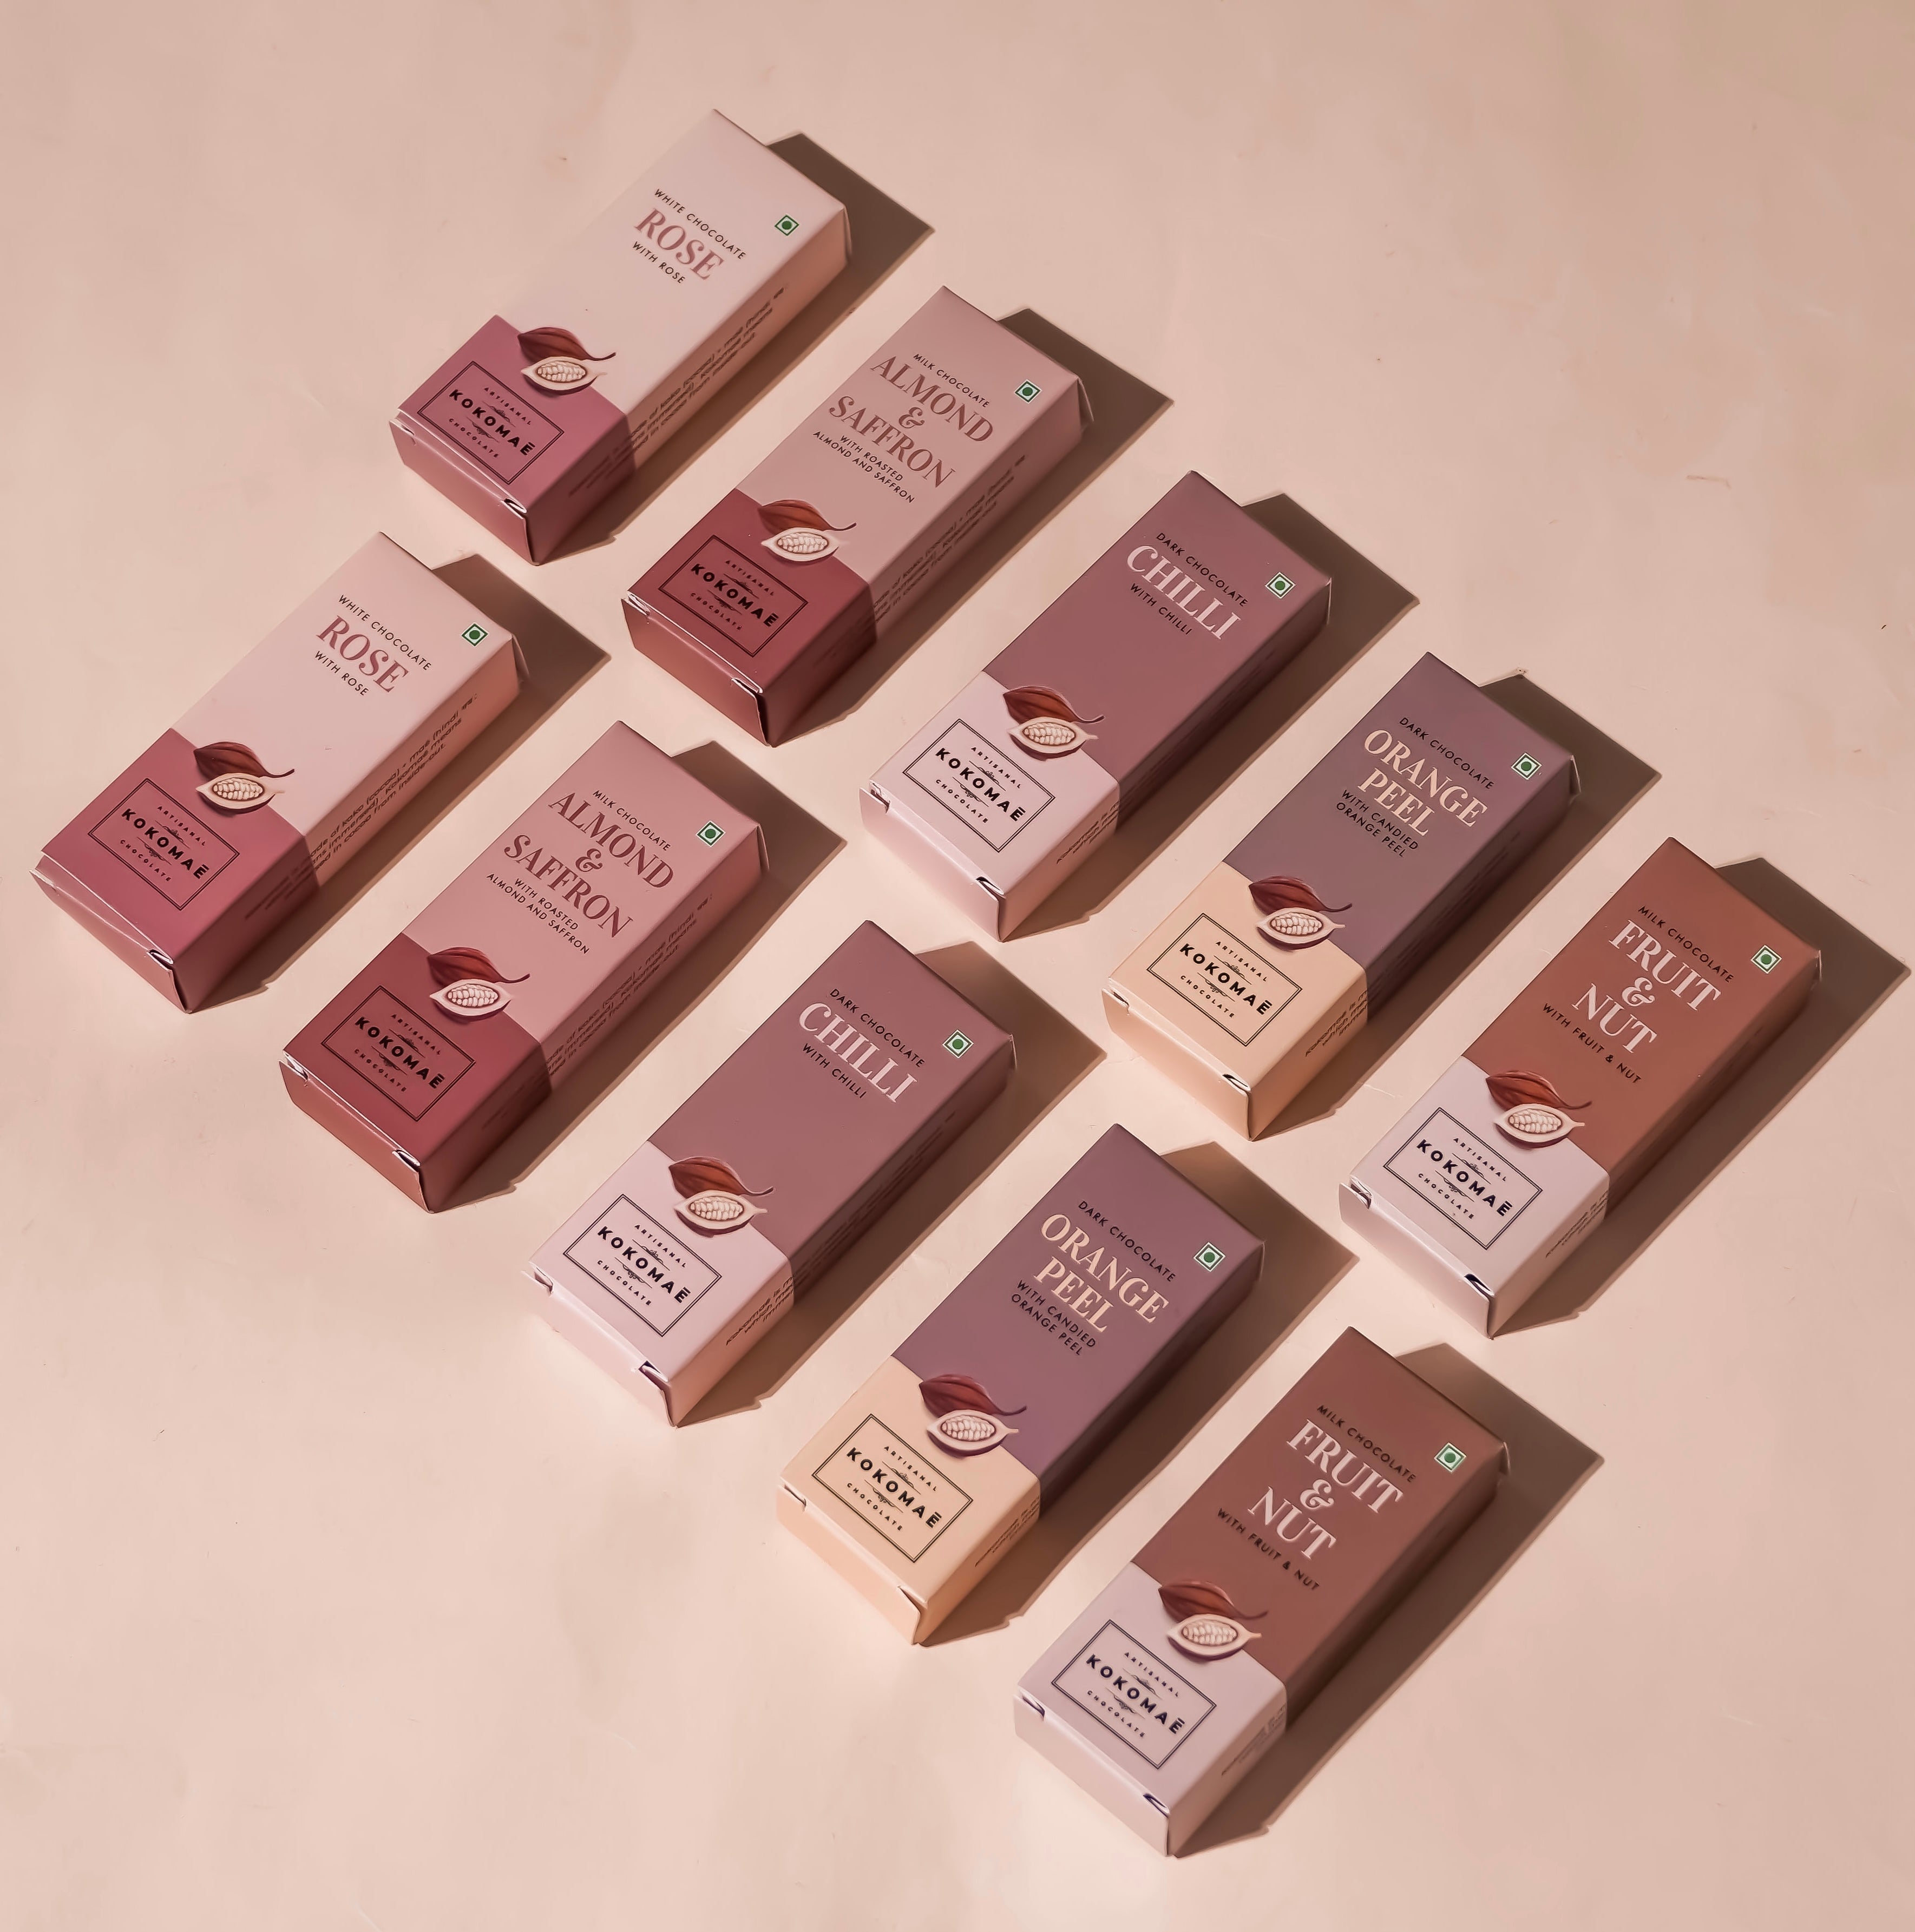 Kokomaē Assorted Gift Box of Belgian Chocolate Mini Bars I Pack of 5 Unique Flavors I Rose, Frui&Nut, Almond & Saffron, Chilli, Orange Peel I 20 bars of 16gm each